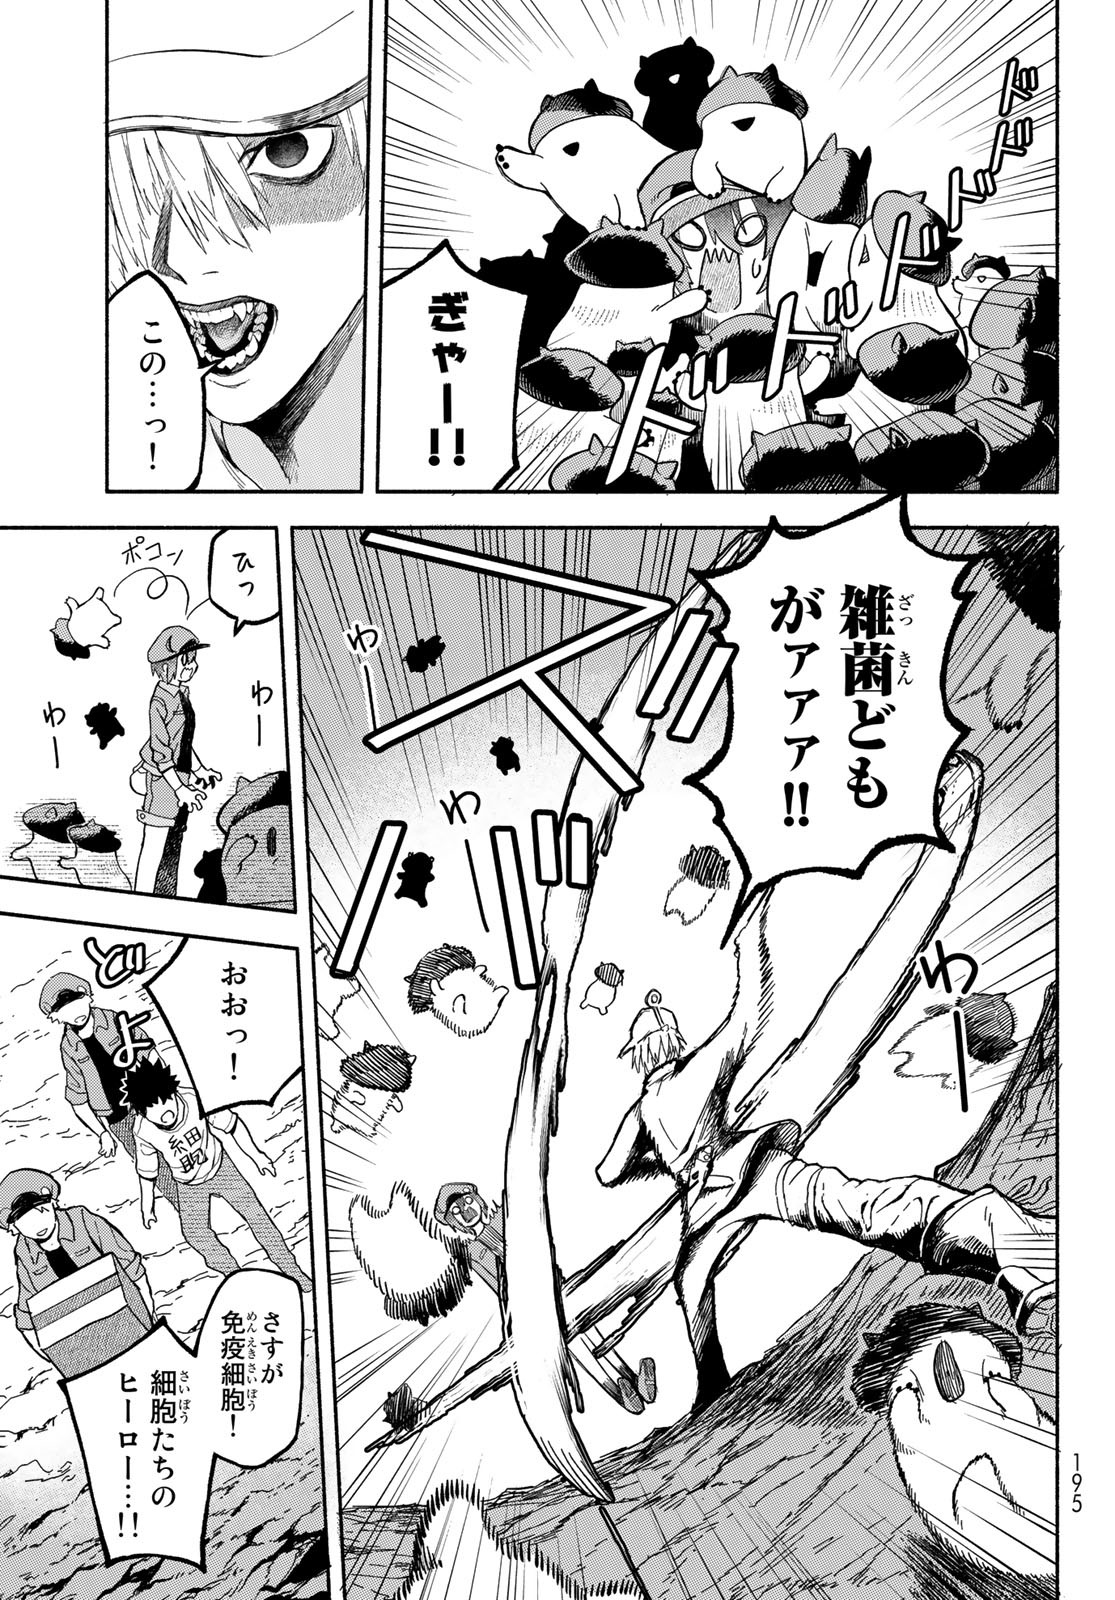 Hataraku Saibou Okusuri - Chapter 3 - Page 7